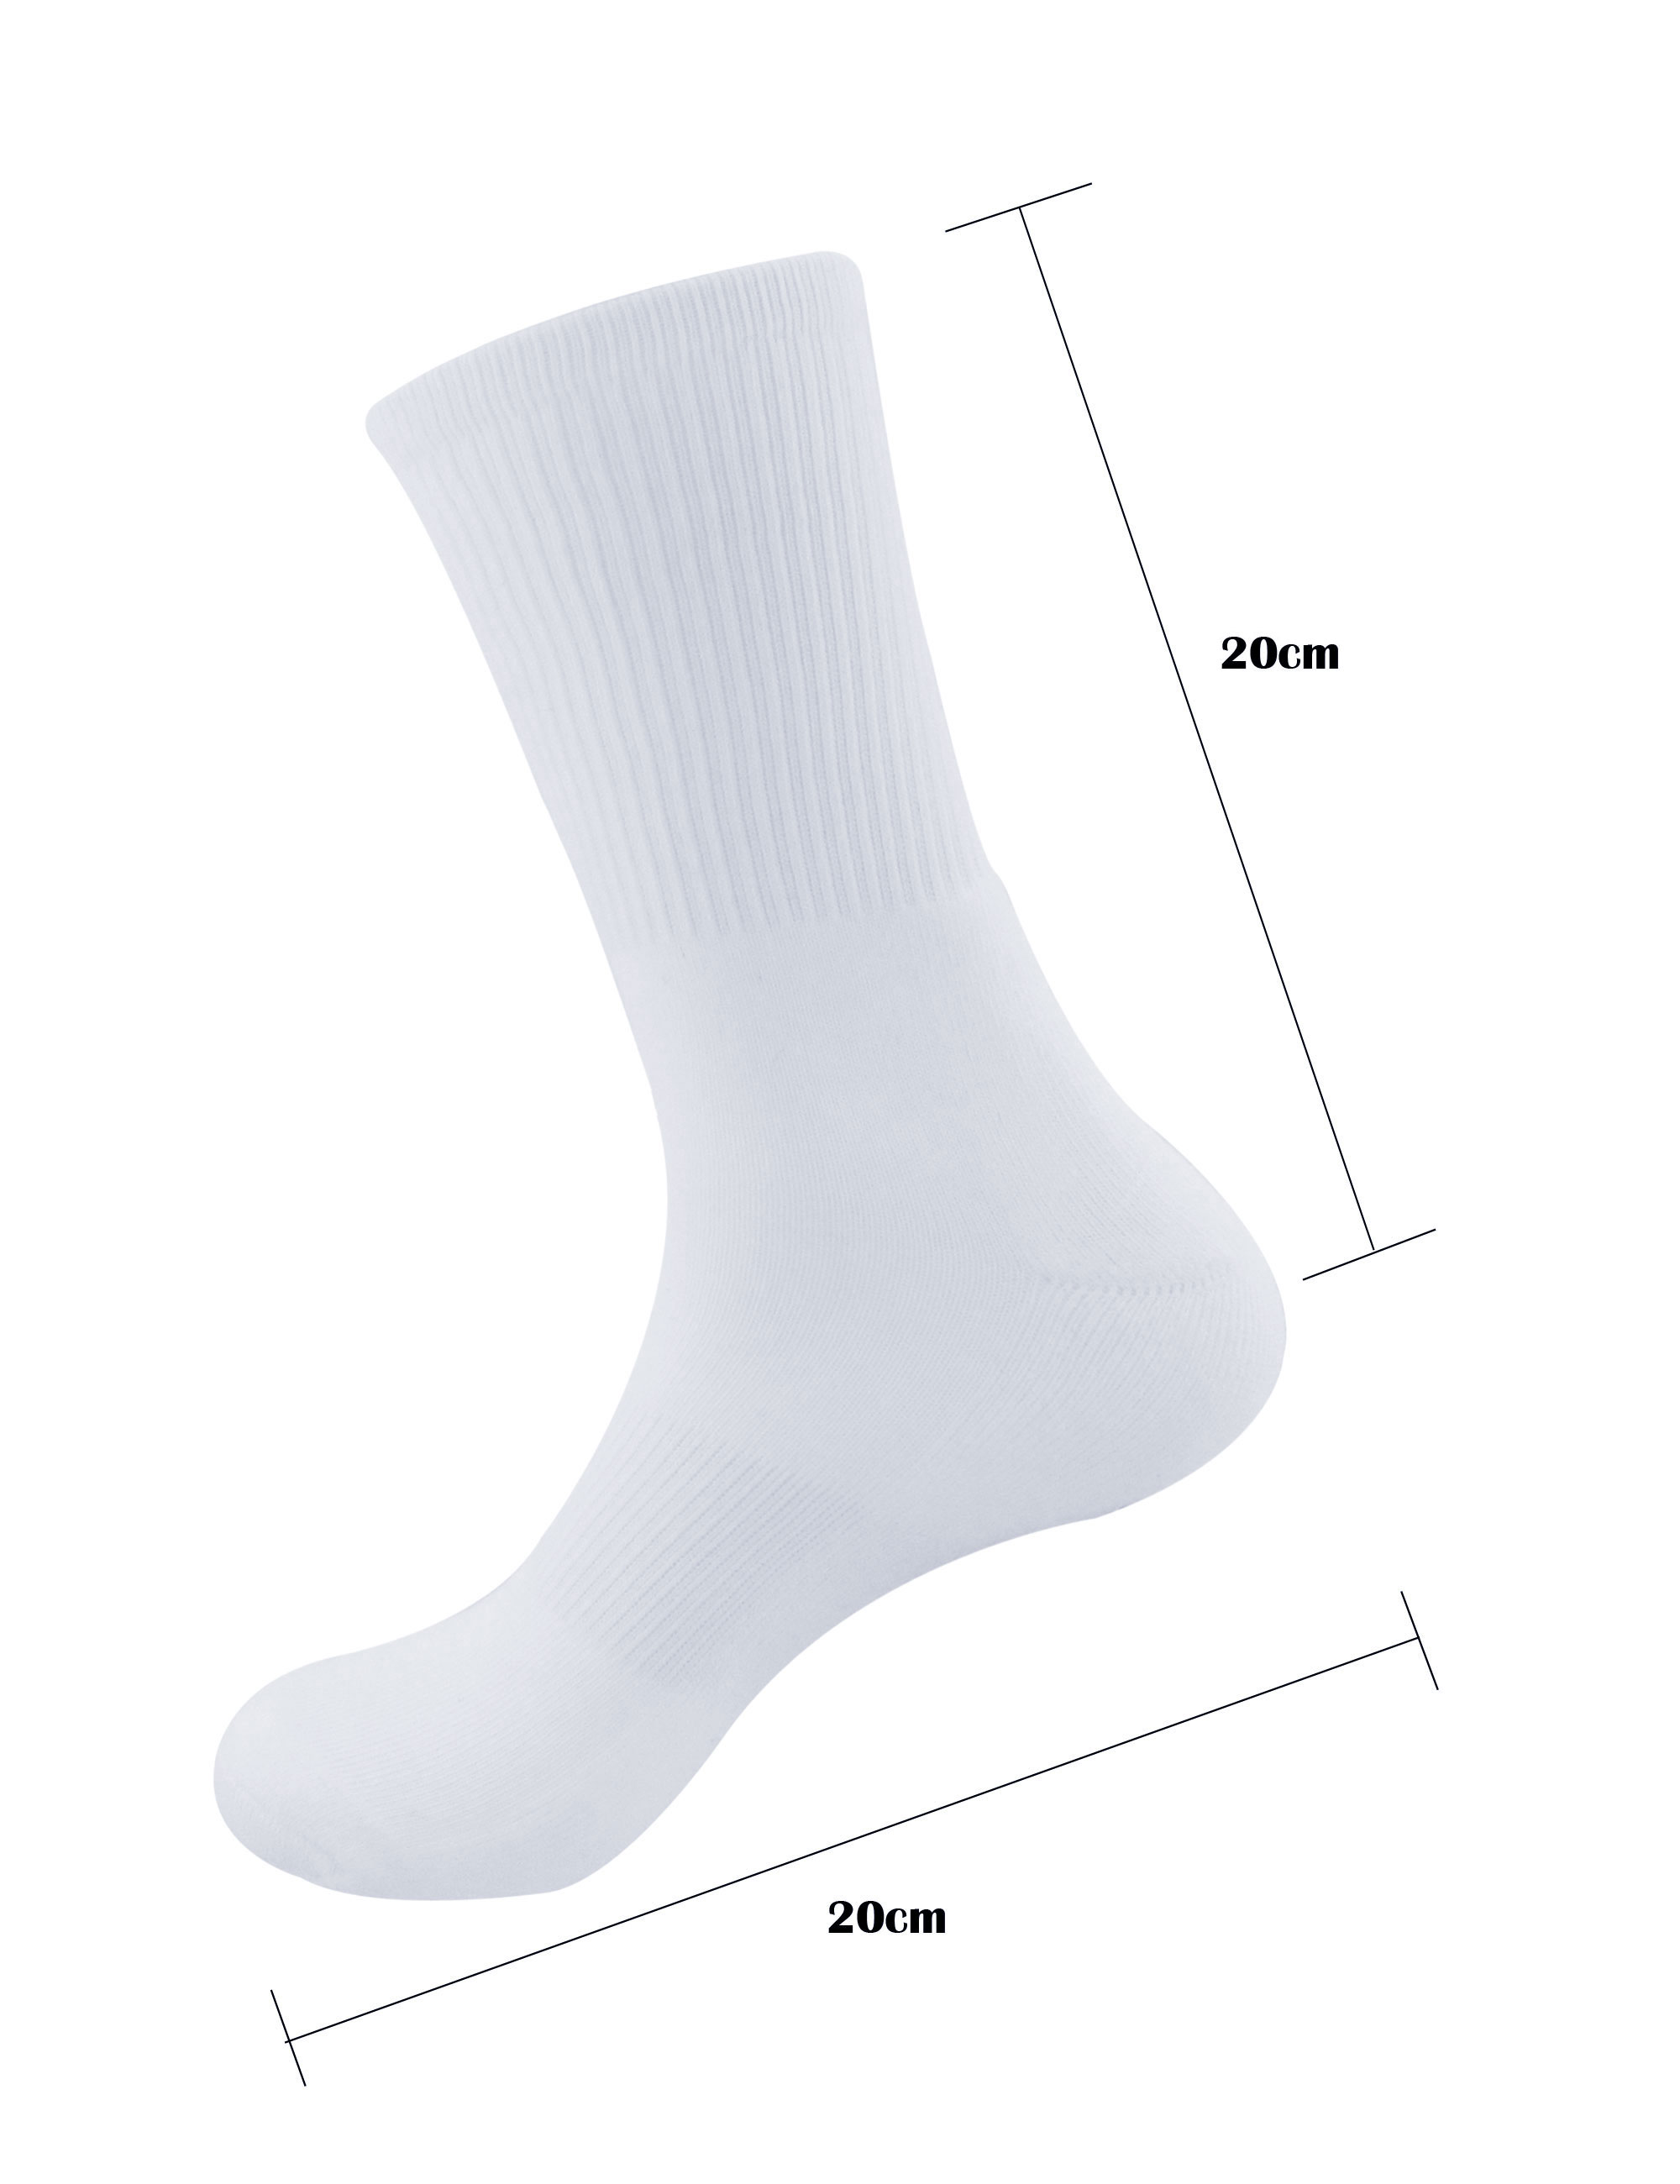 BambooMN Blank Sublimation Socks SubReady Performance Crew Socks, White Blank, 20x20cm, 12prs, Adult Unisex, Size: 20cmx20cm